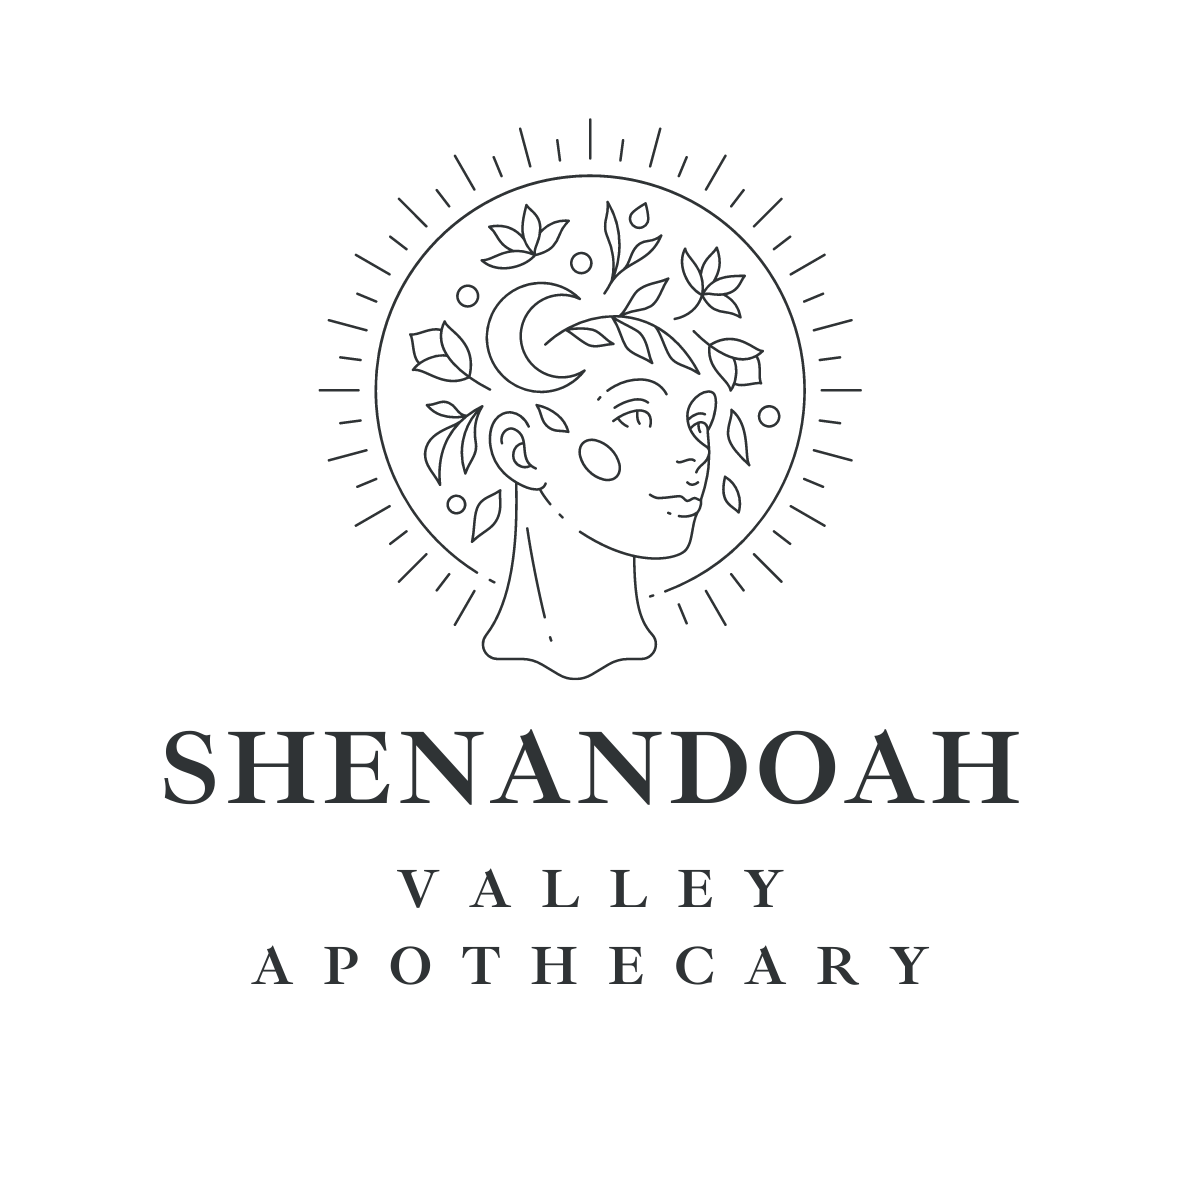 Shenandoah Valley Apothecary